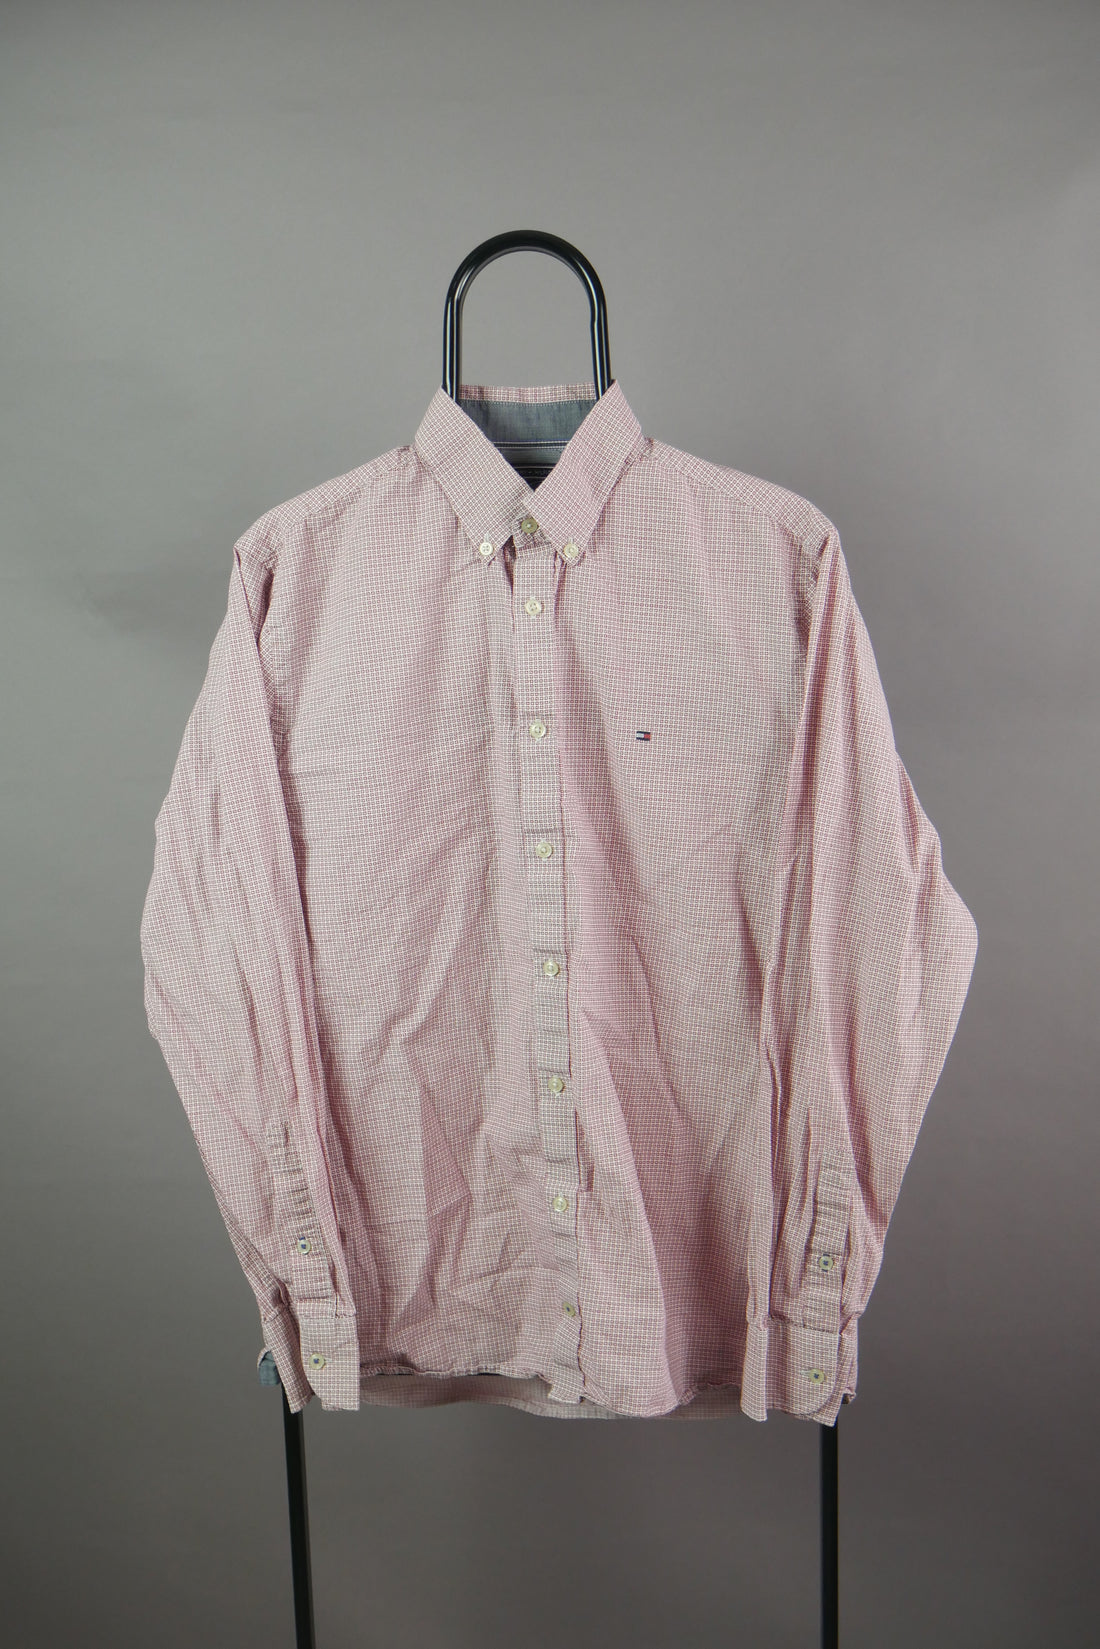 The Tommy Hilfiger Geometric Print Long Sleeve Shirt (L)